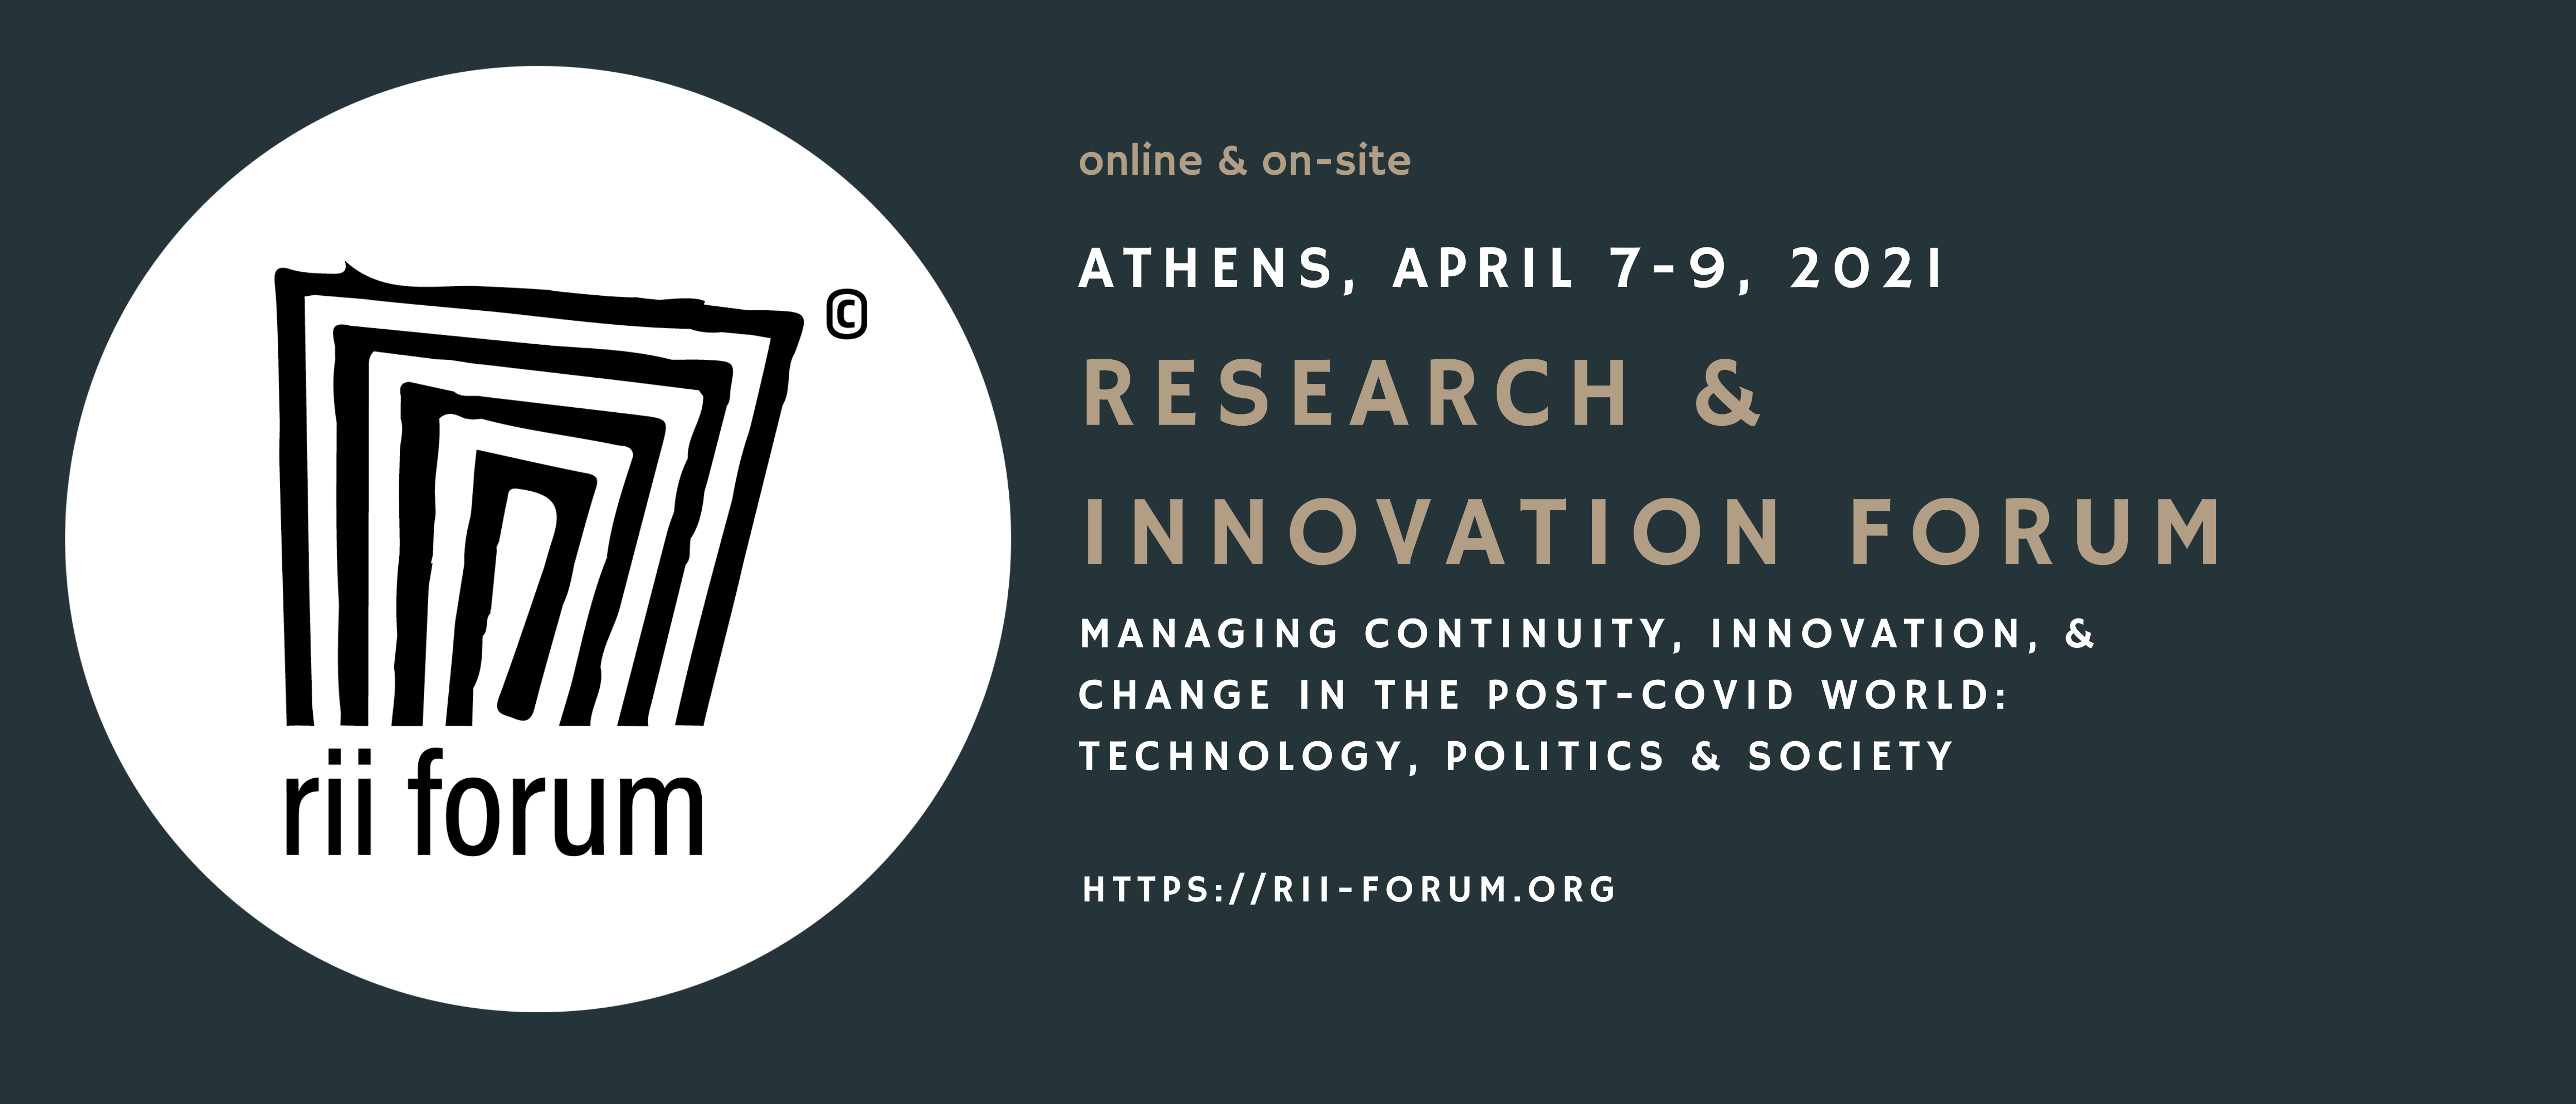 Athens-April-7-9-2021-banner